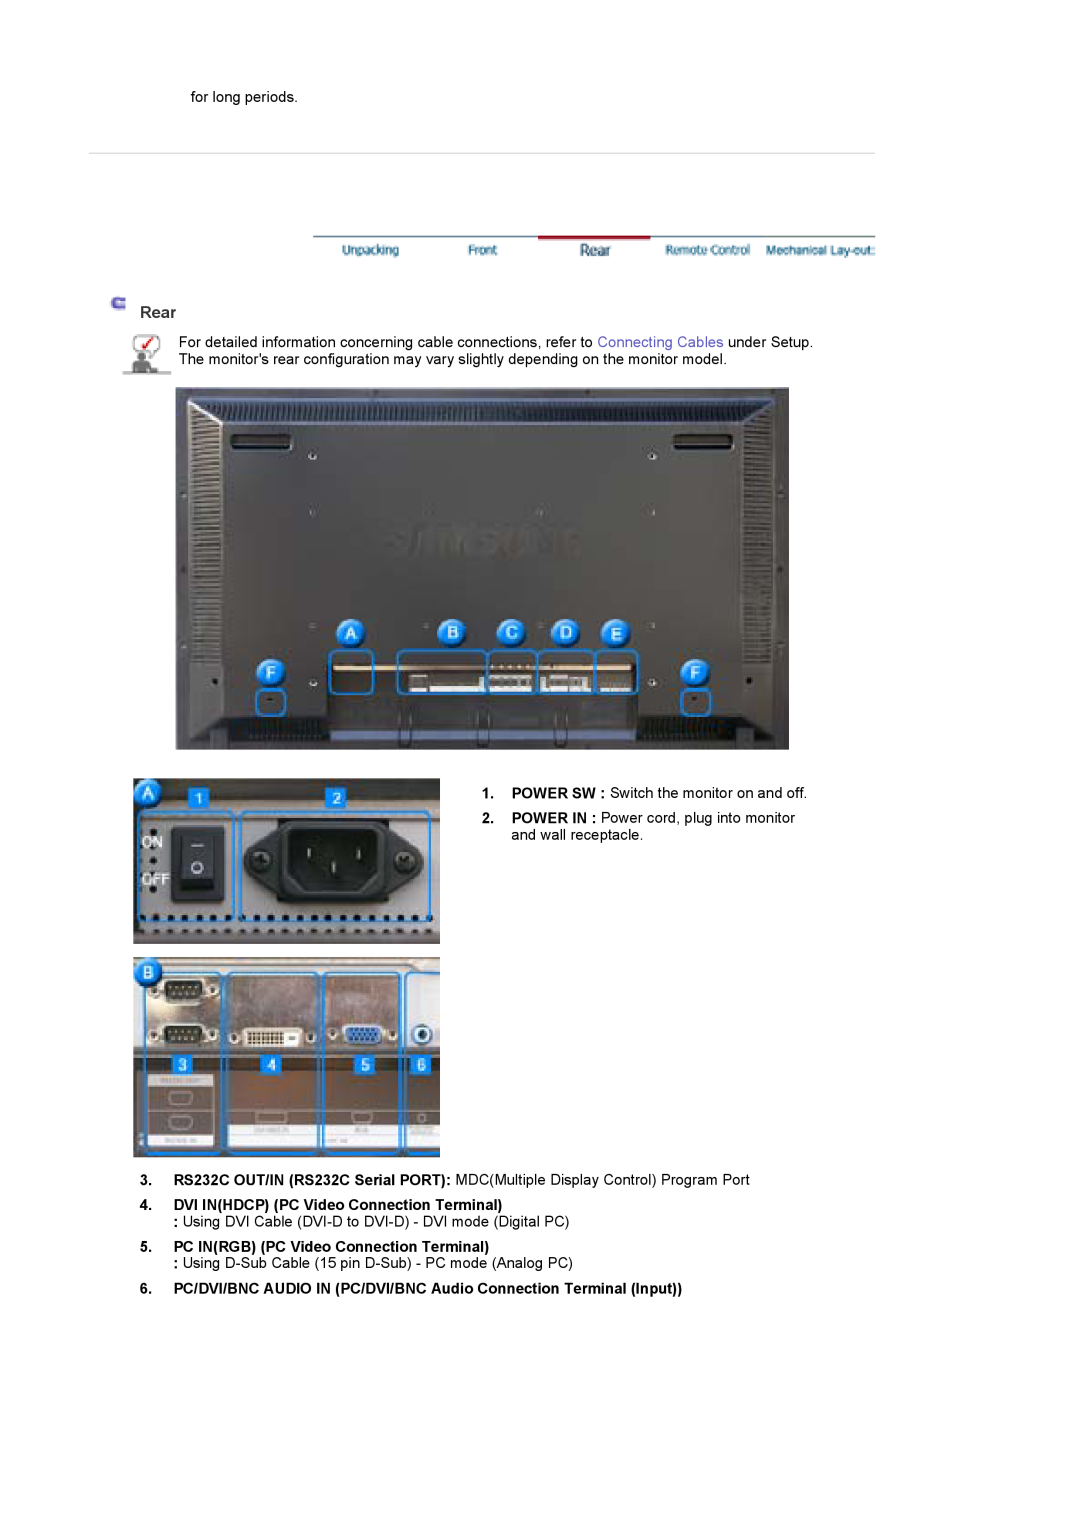 Samsung 400Pn, 400P manual Rear, DVI INHDCP PC Video Connection Terminal, PC INRGB PC Video Connection Terminal 